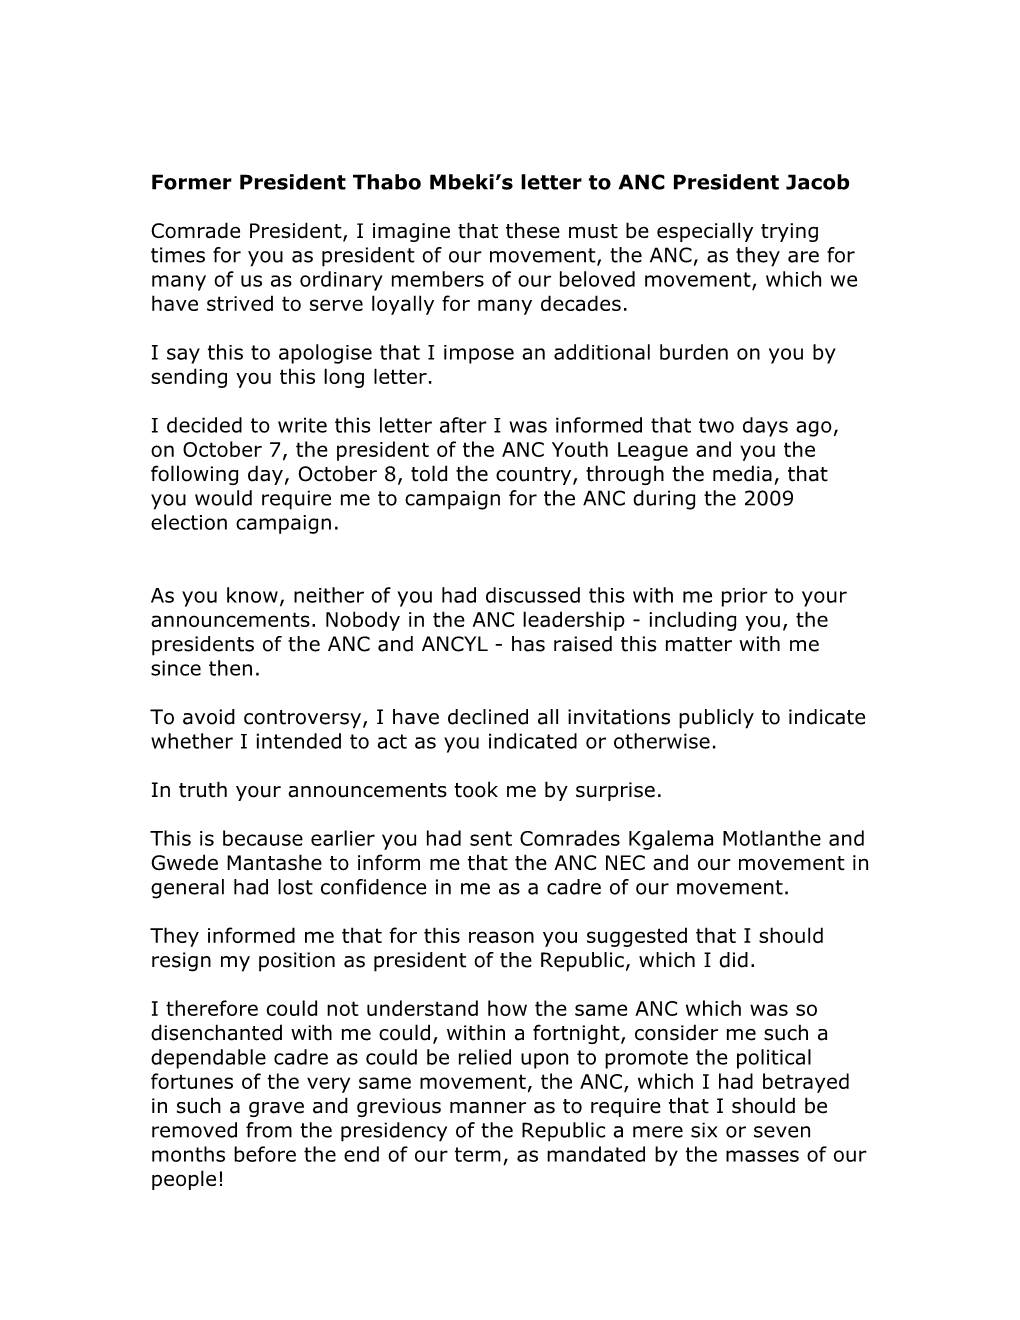 Former President Thabo Mbeki's Letter to ANC President Jacob Zuma